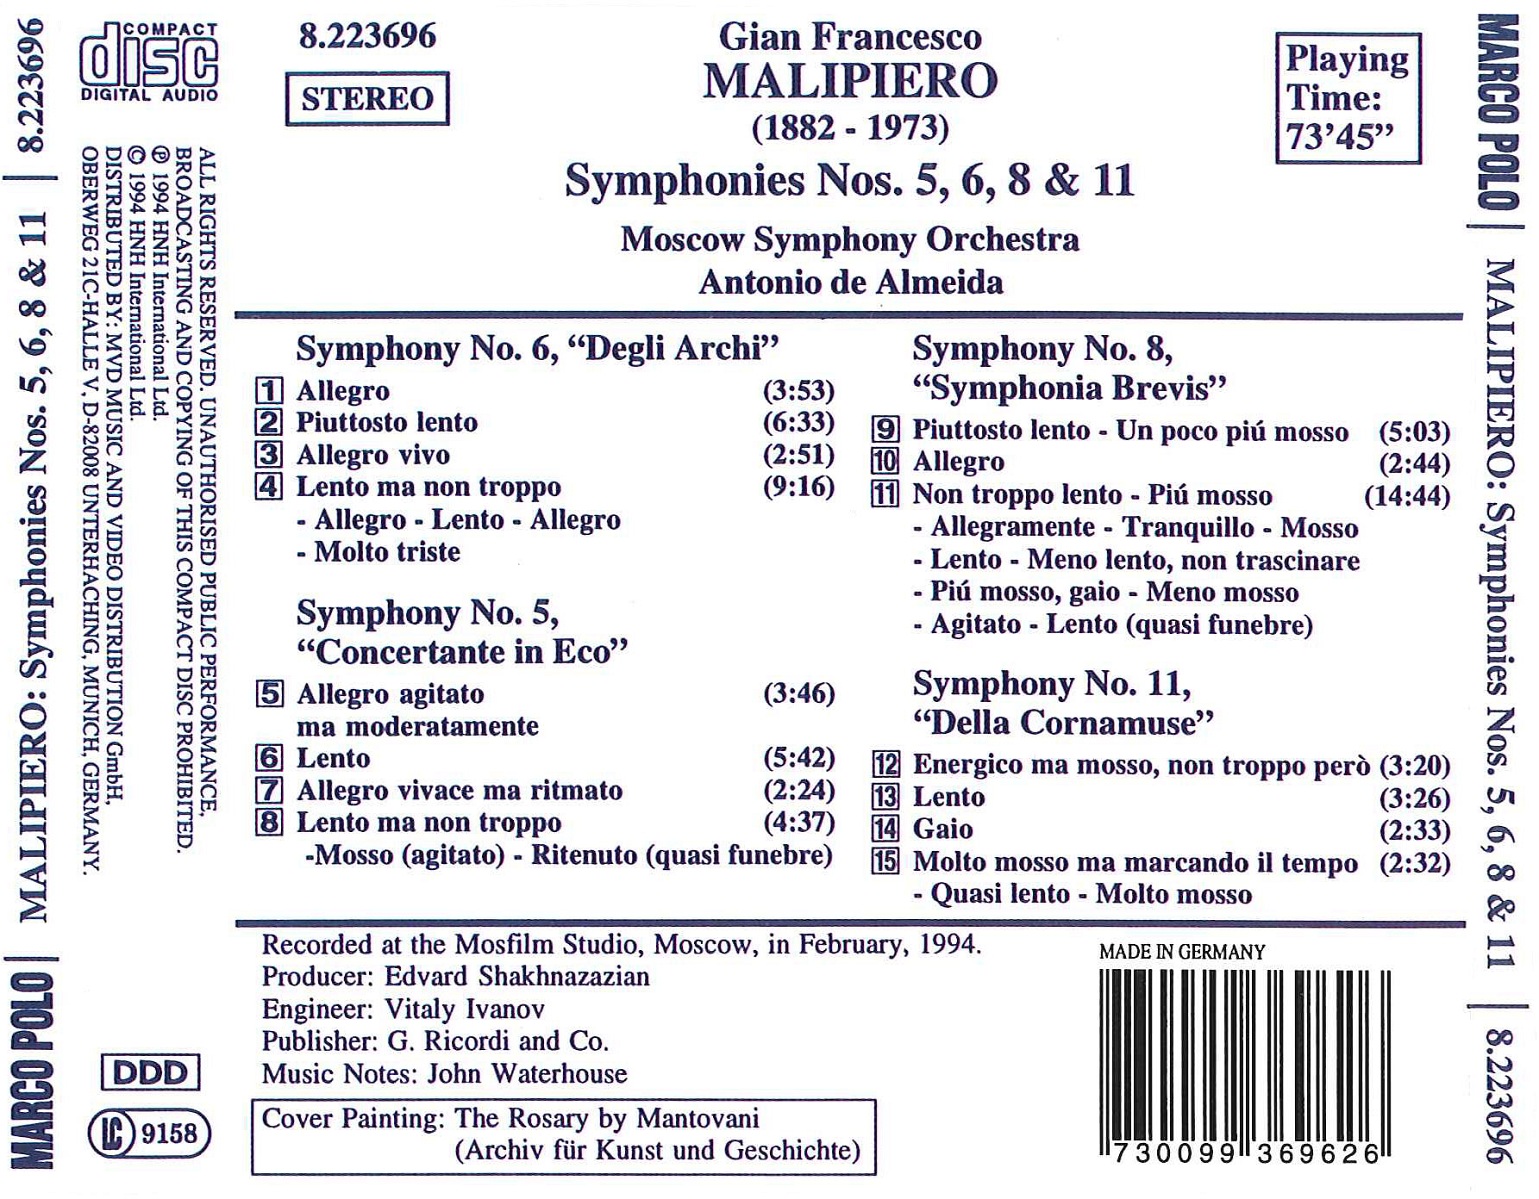 MALIPIERO: Symphonies nos 5, 6, 8 & 11 - slide-1